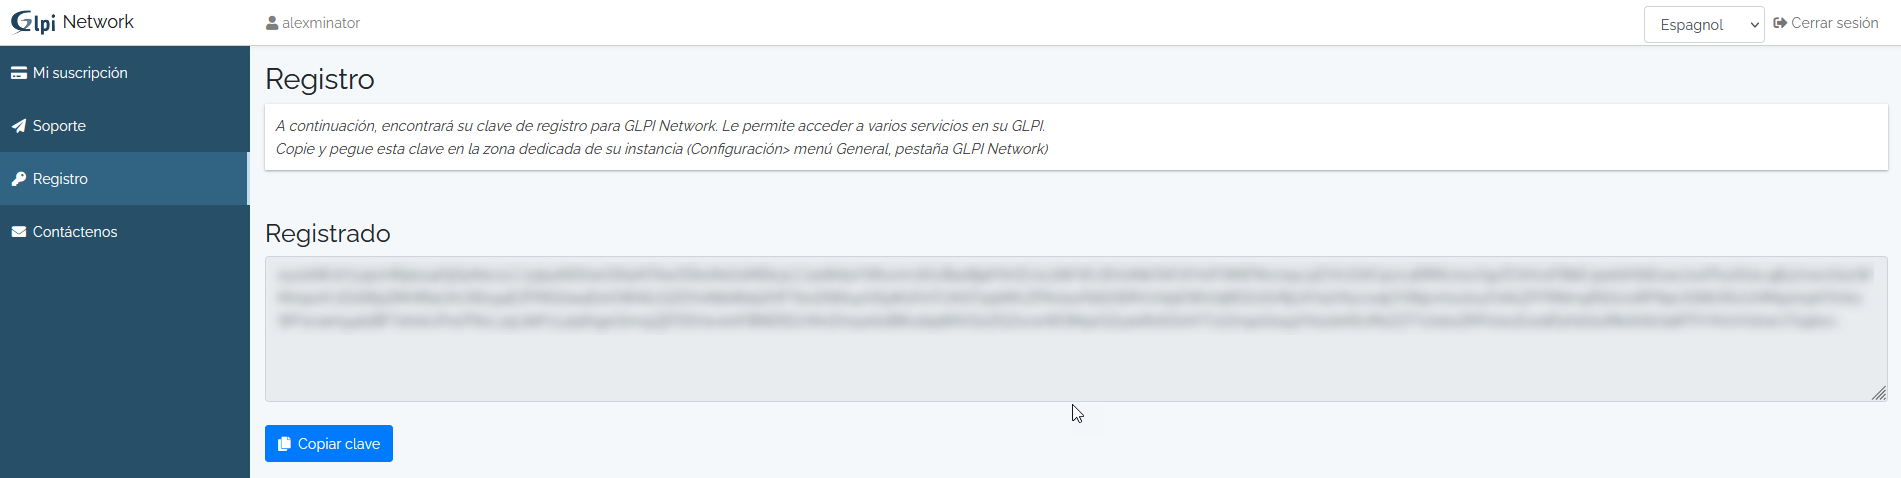 glpi_network